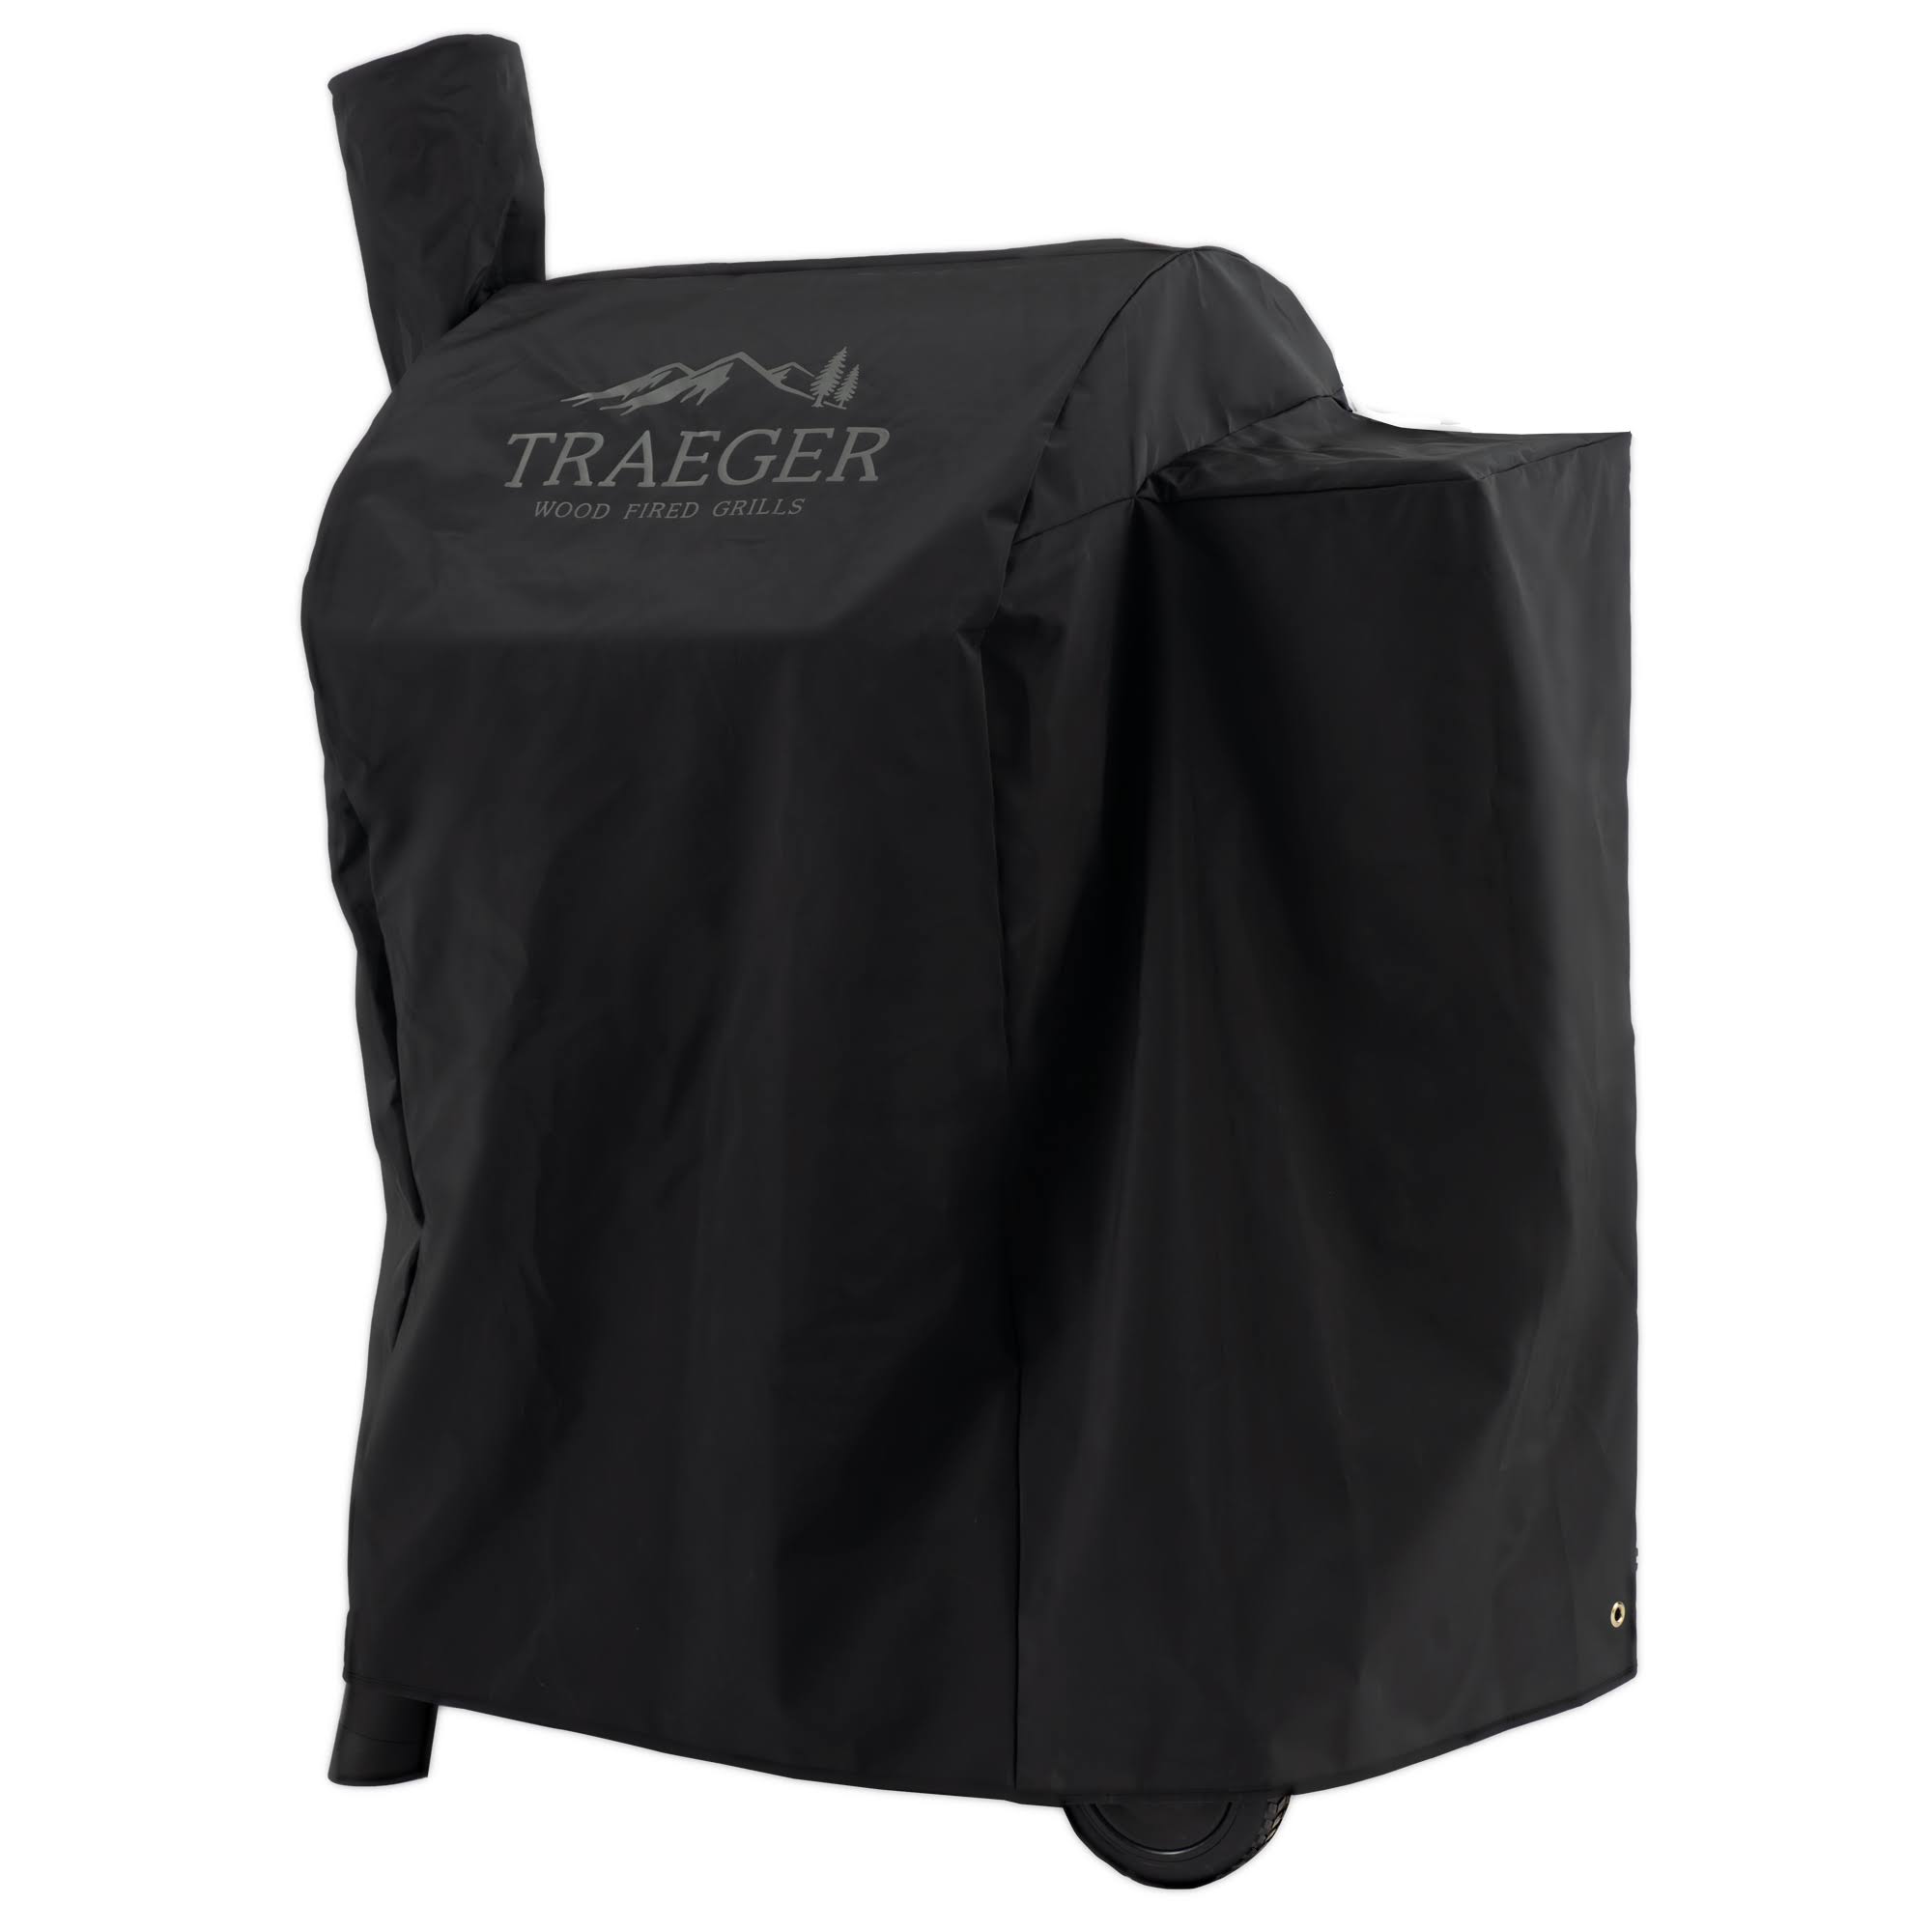 Traeger Pro 575 Grill Cover - Black